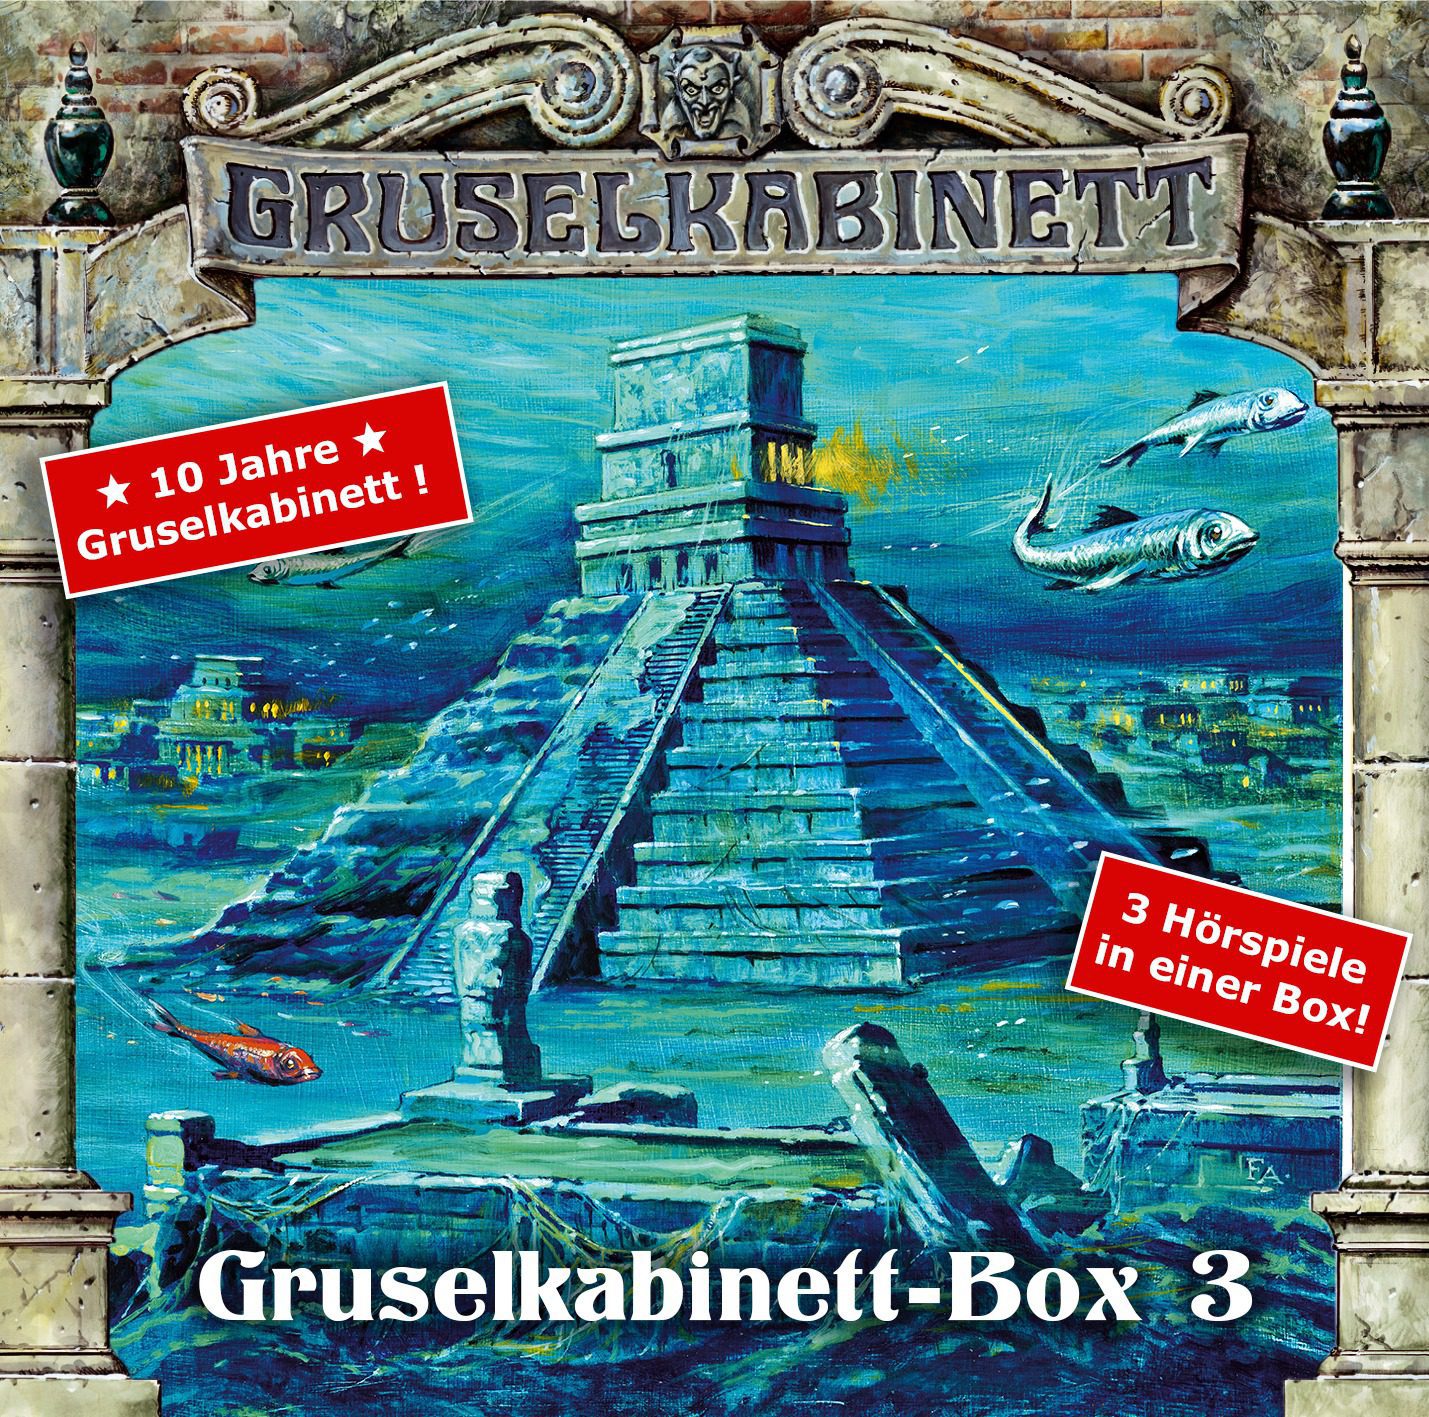 Gruselkabinett-Box 3